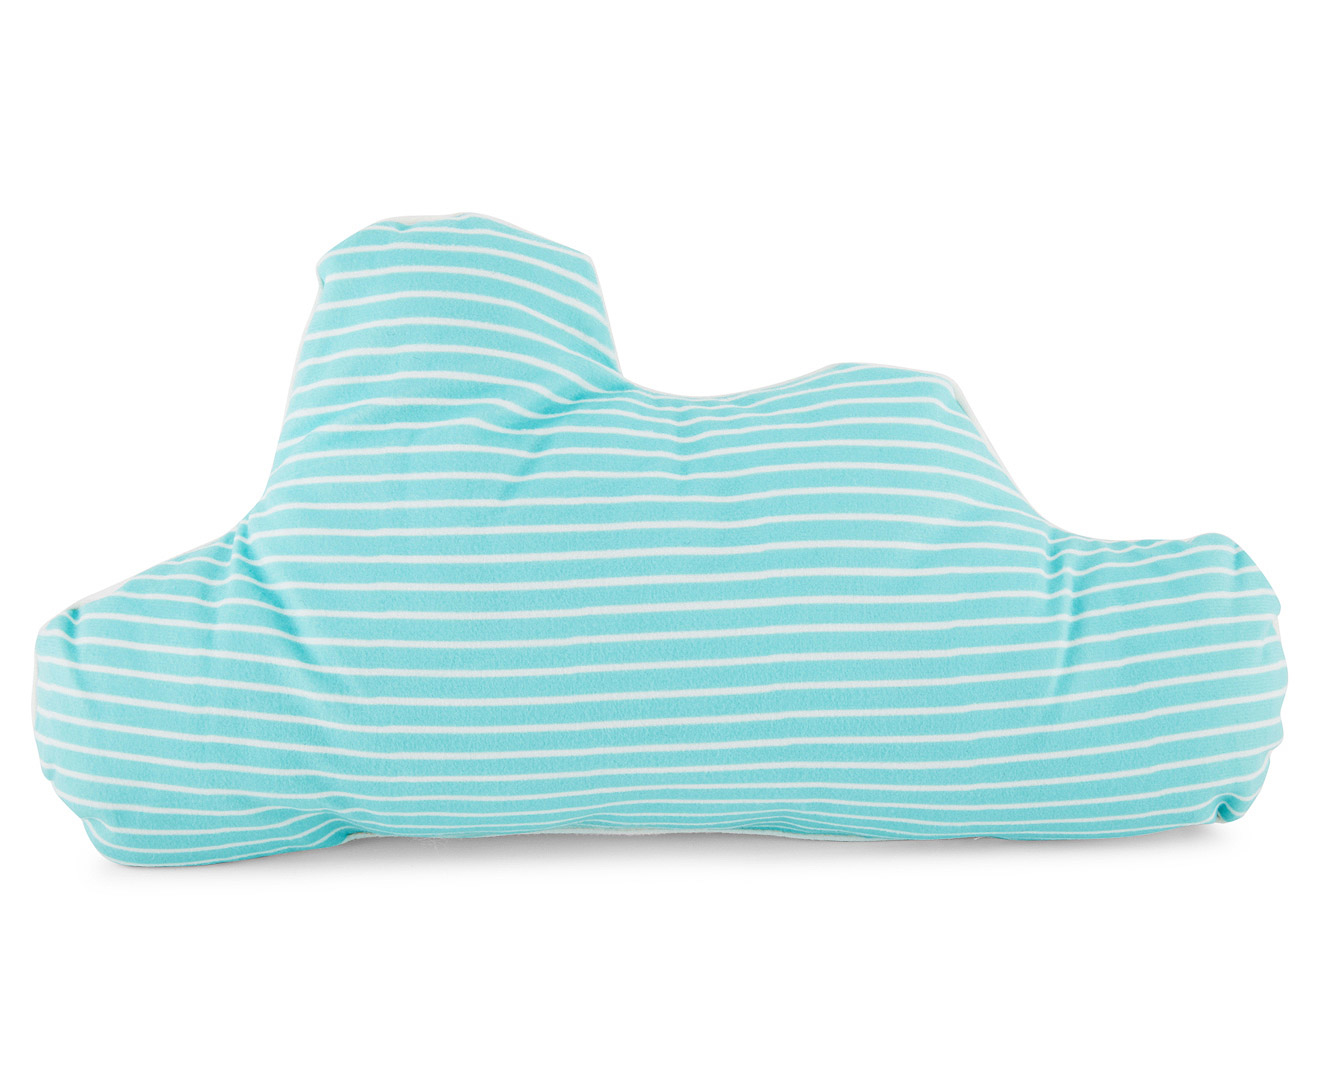 Kids Concepts Striped Cloud Cushion - Mint